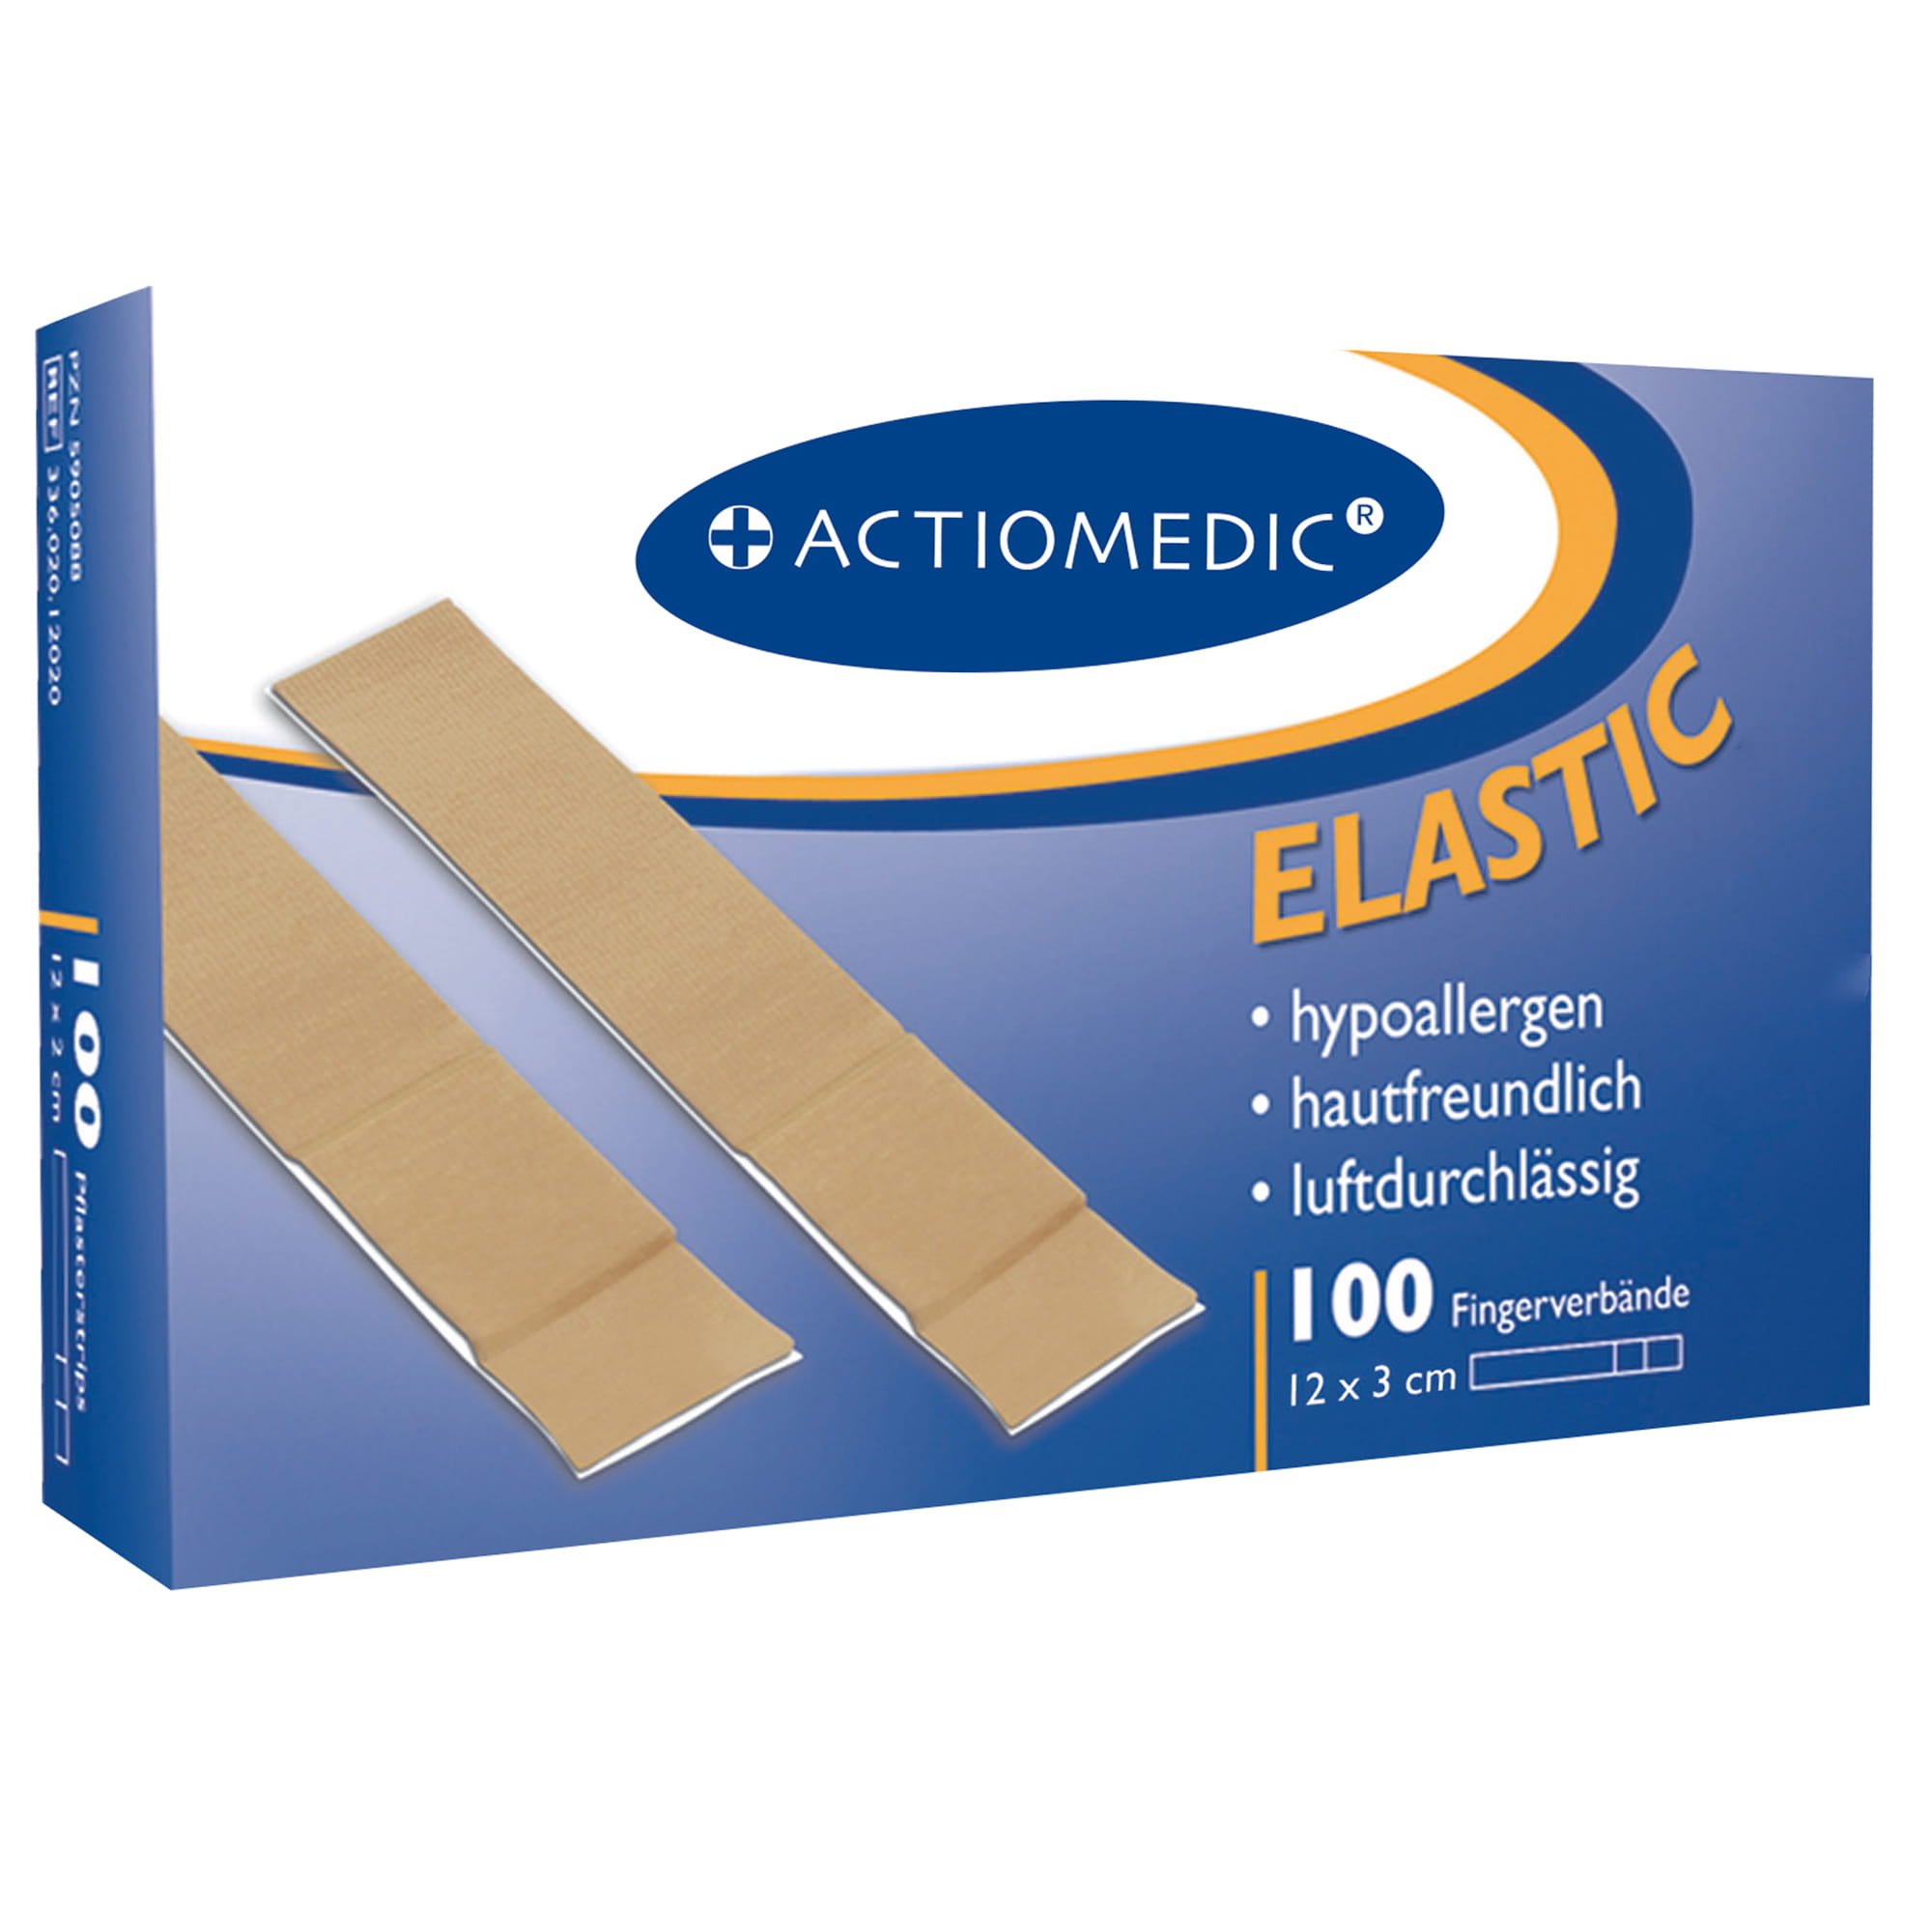 Actiomedic® ELASTIC Fingerverband Hautfarben 12 x 3 cm